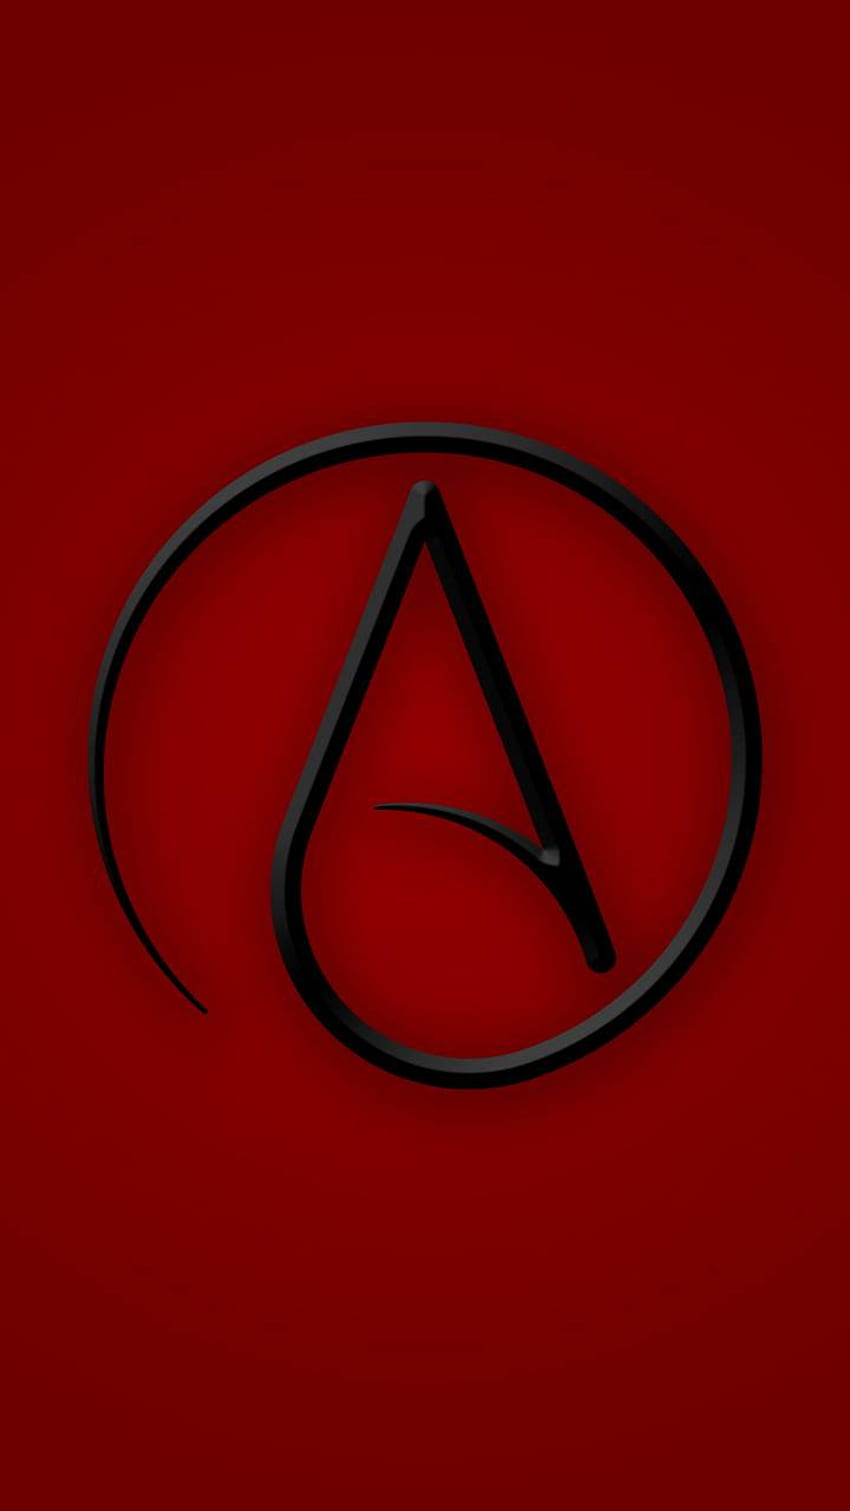 Universal Atheist Symbol - Inspiring Design